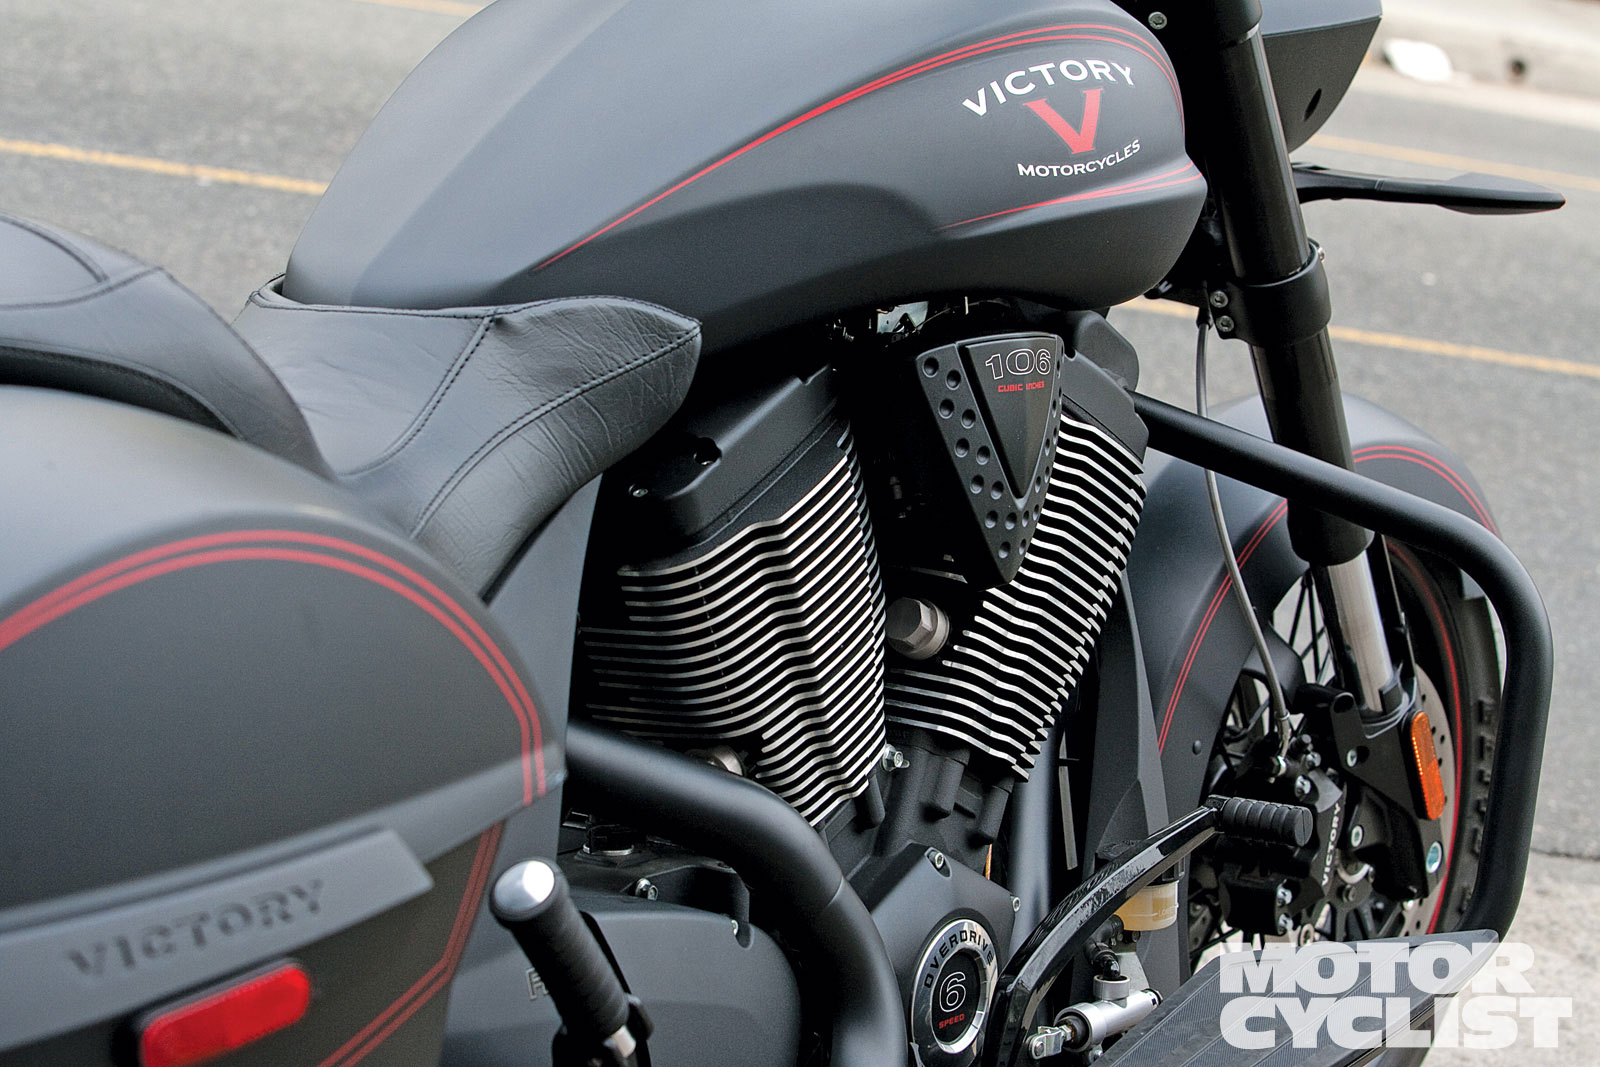 2012 Victory Motorcycles HIGH-BALL - 1731cc Standard Equipment & Specs